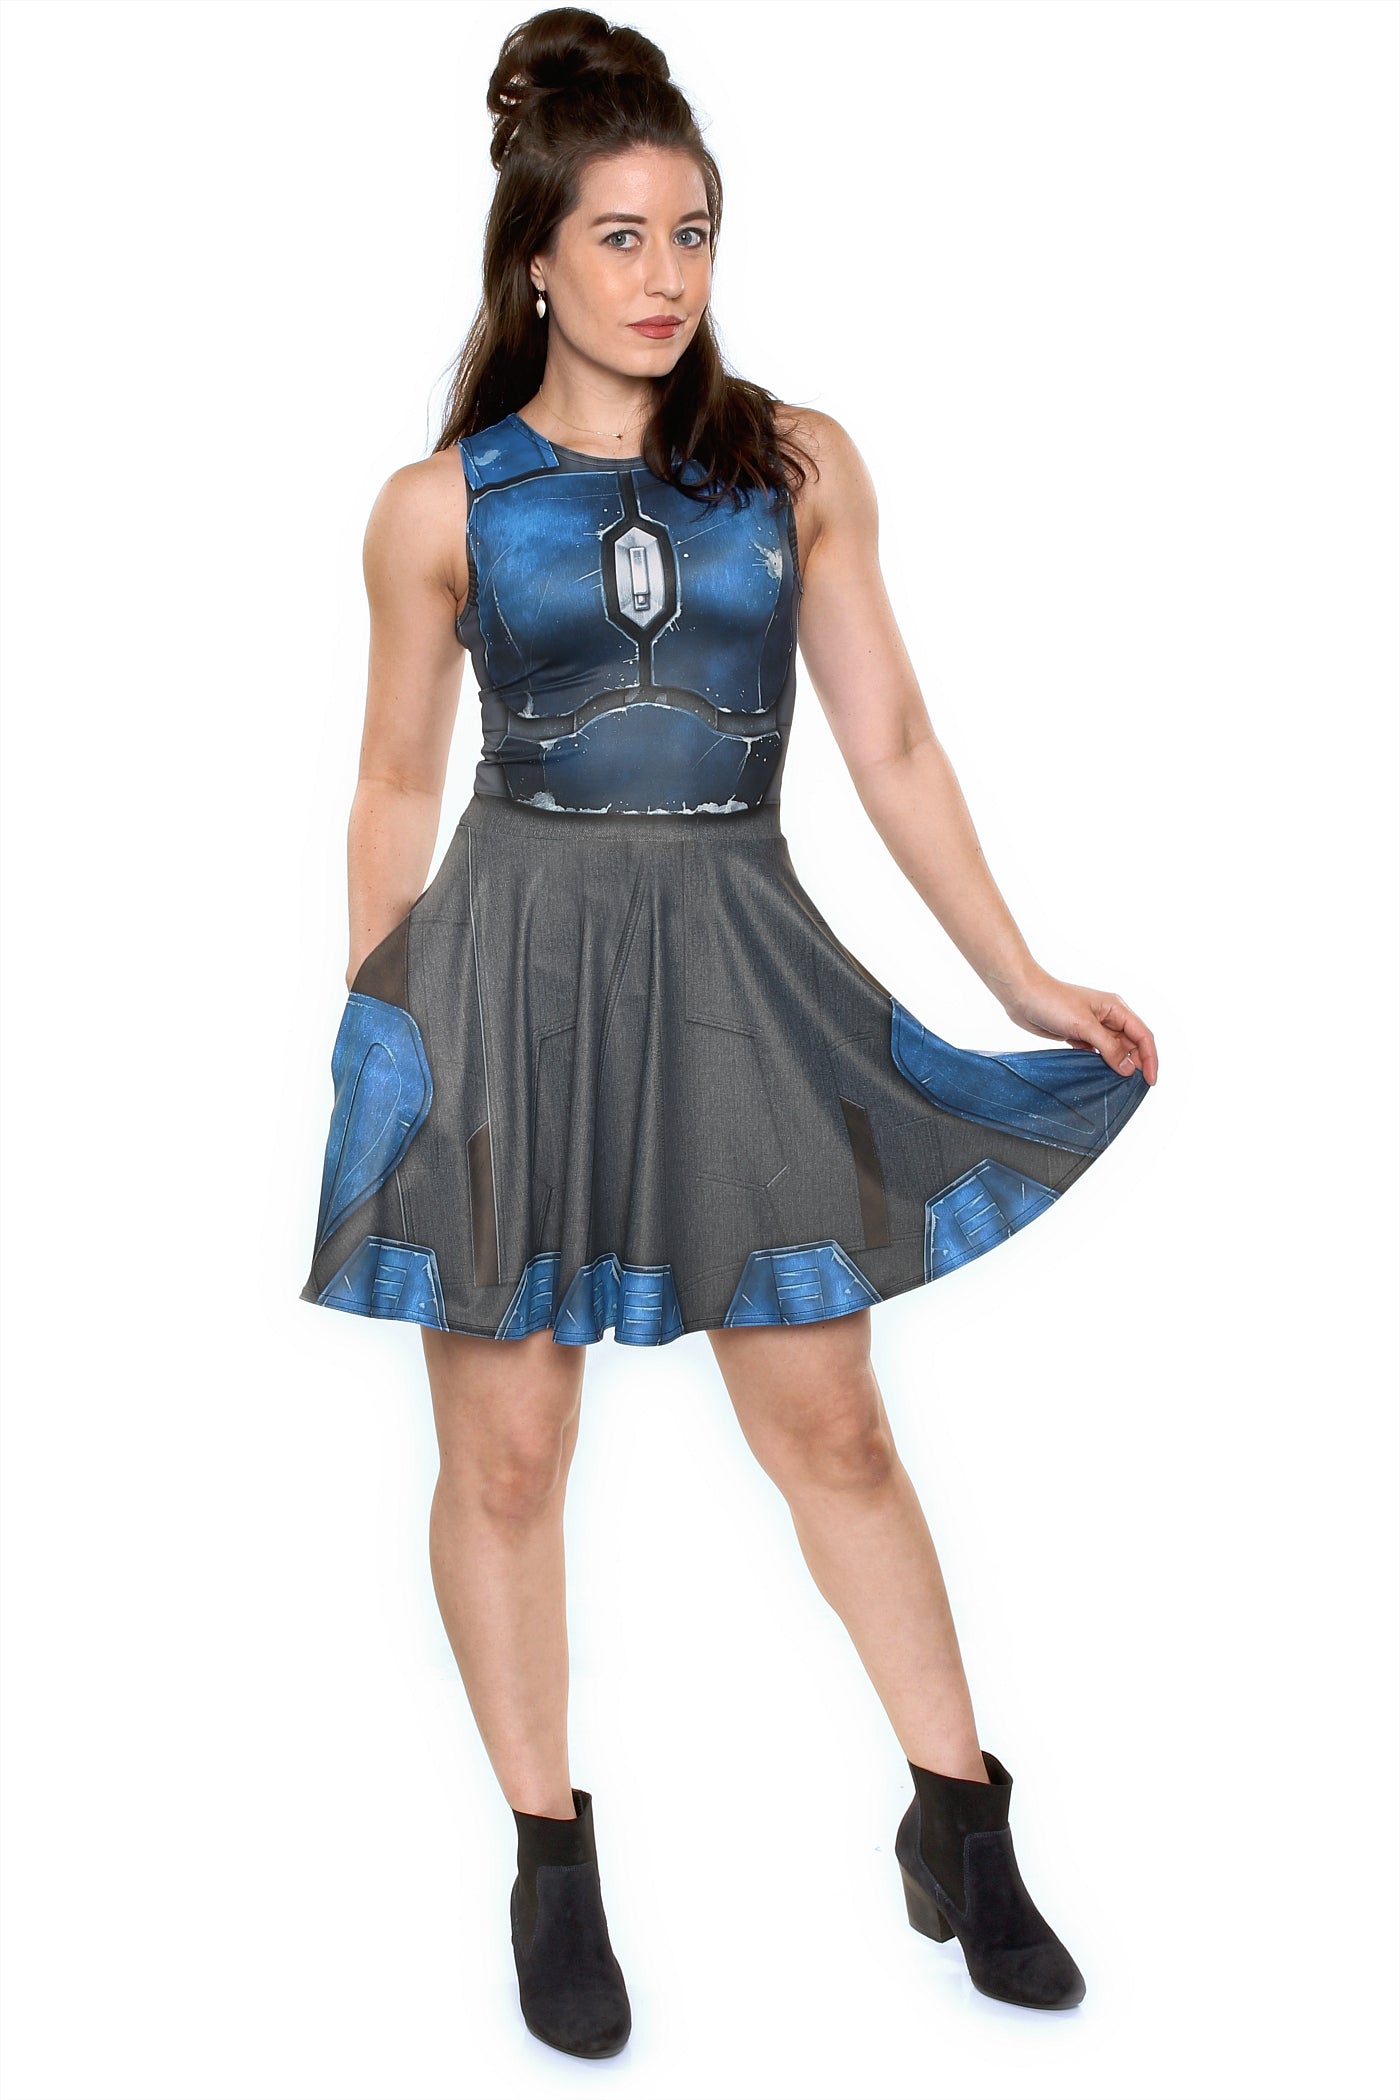 Nighthawk Blue A-Line Dress